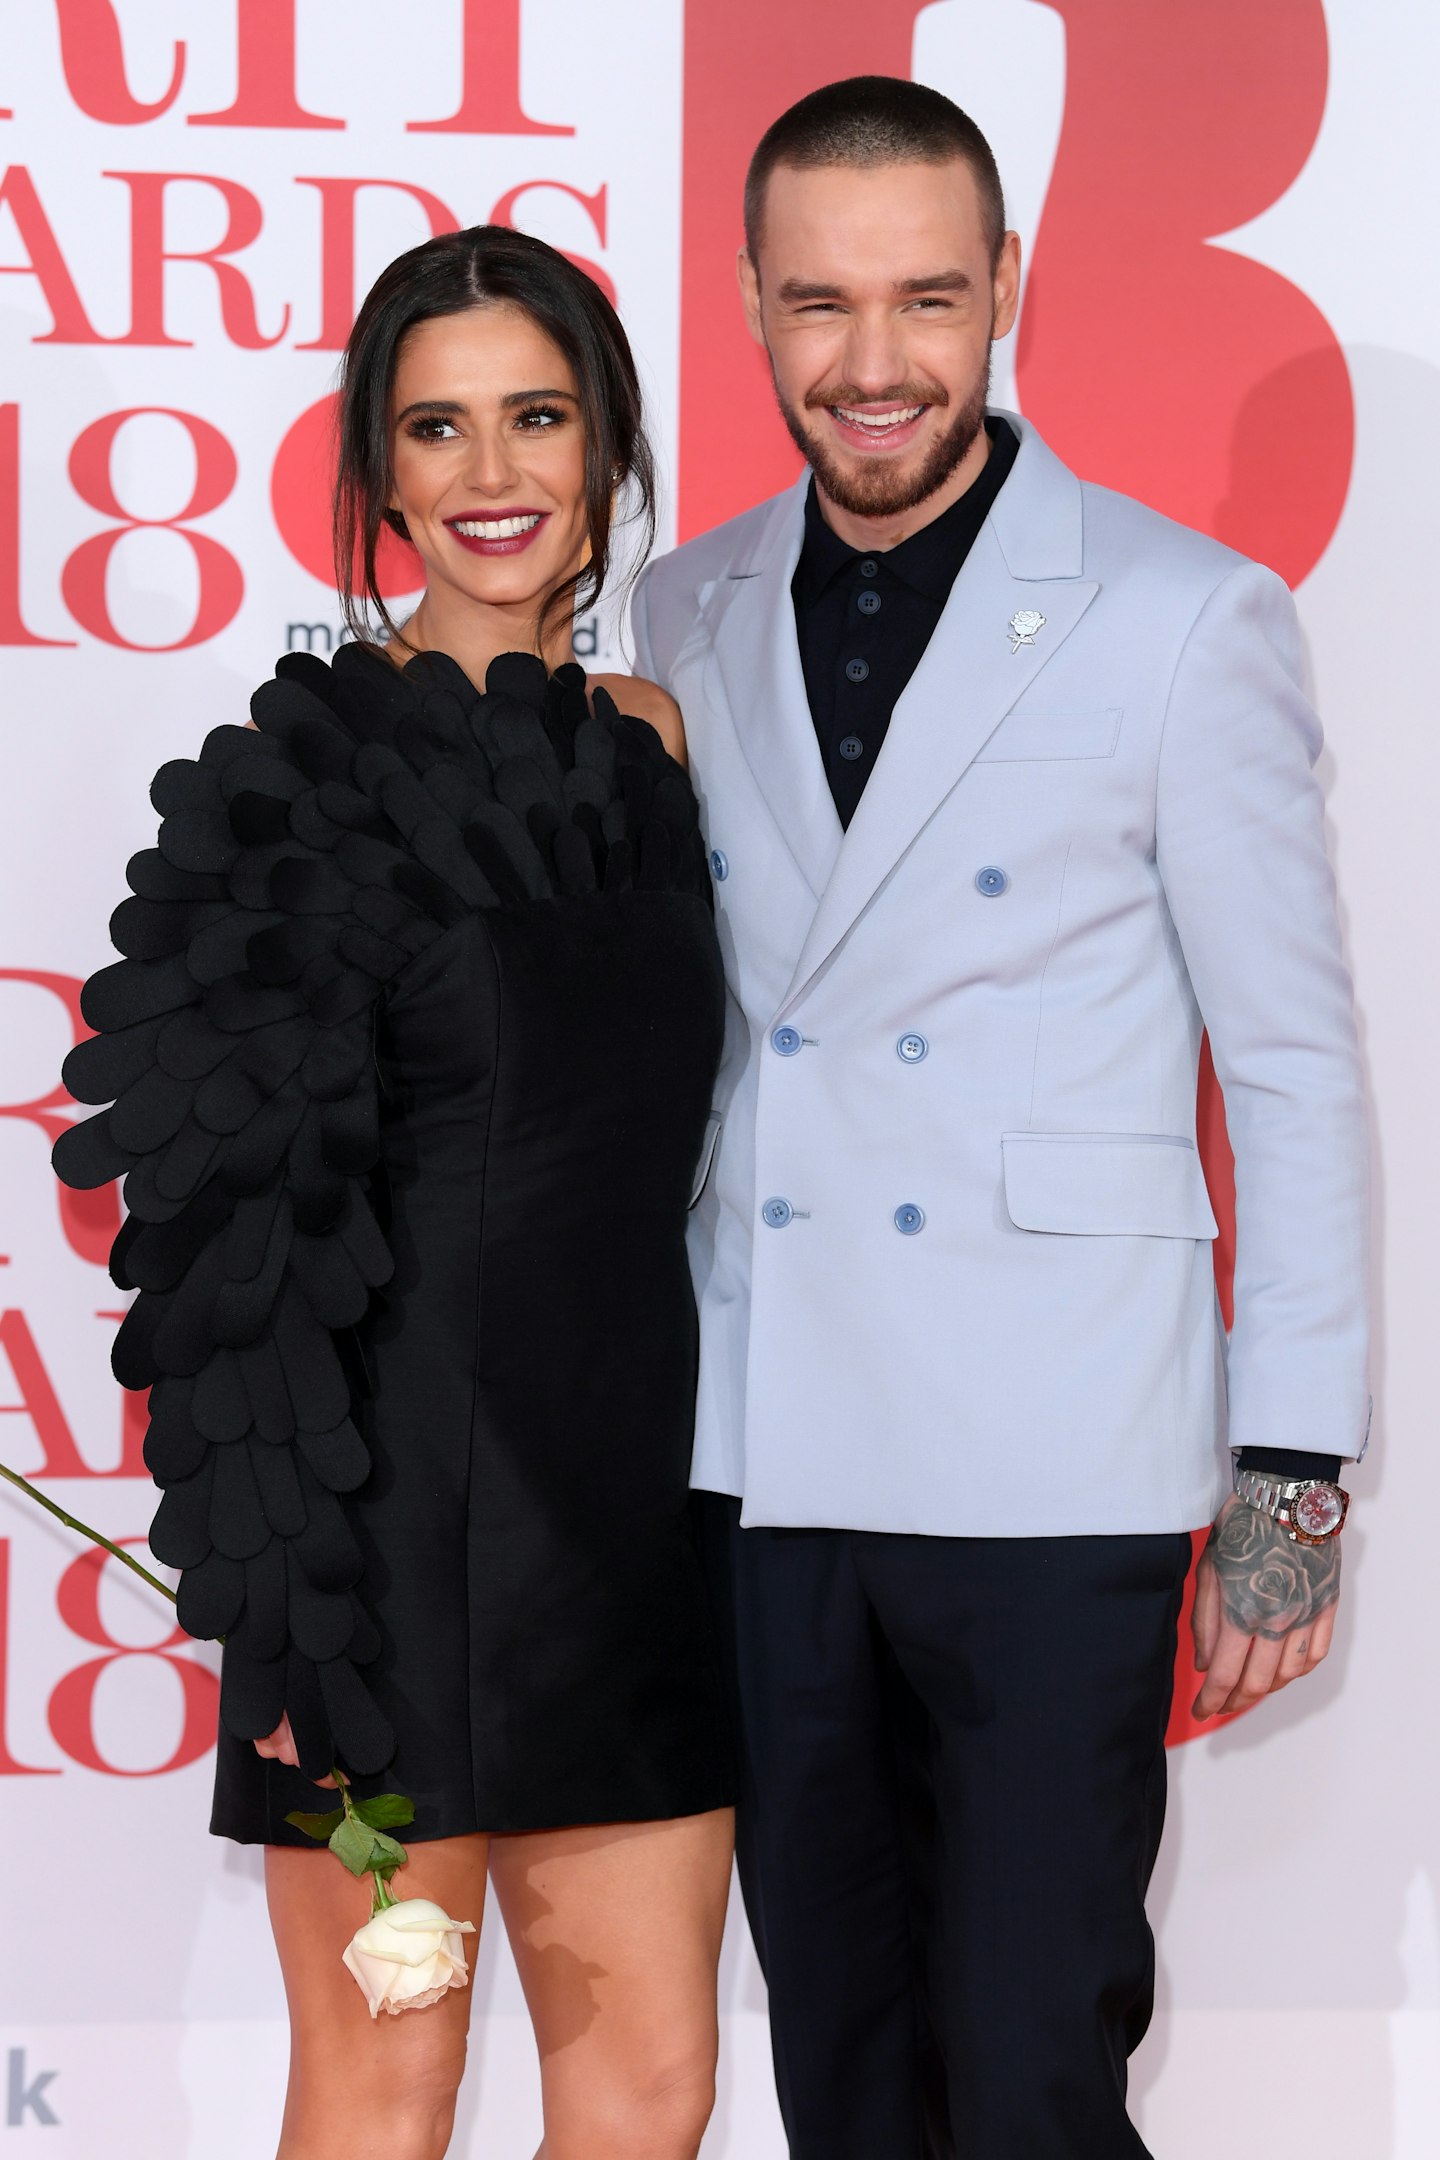 Cheryl Tweedy and Liam Payne at the BRIT Awards 2018